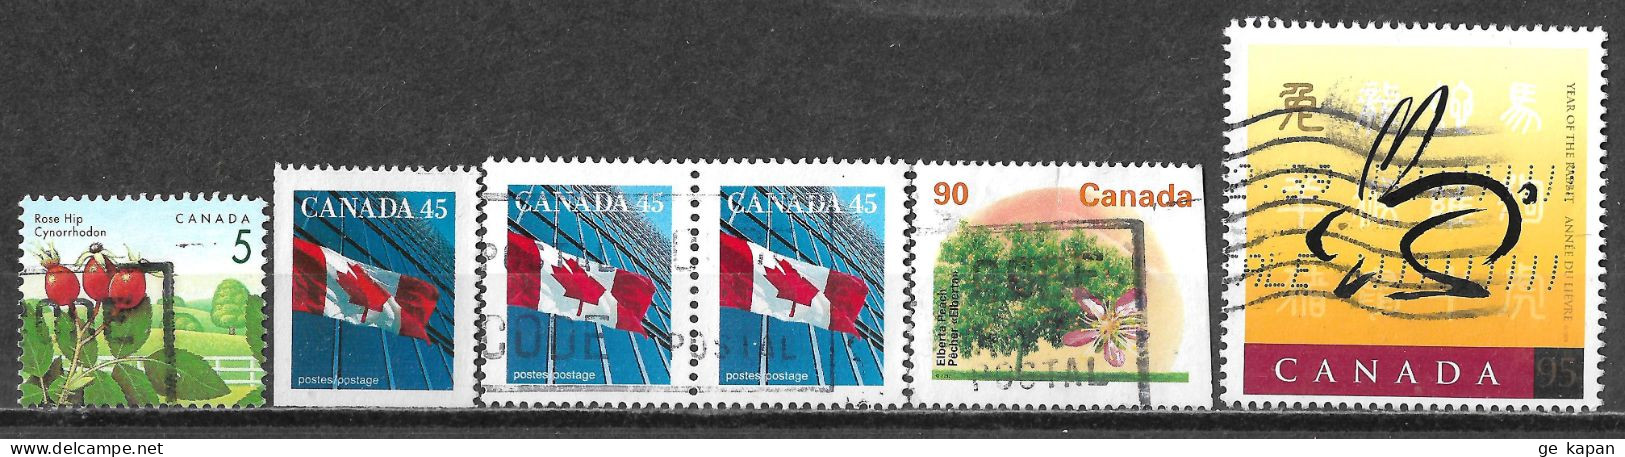 1991,1999 CANADA Set Of 6 USED Stamps (Scott # 1352,1361,1374,1768) CV $3.50 - Usati